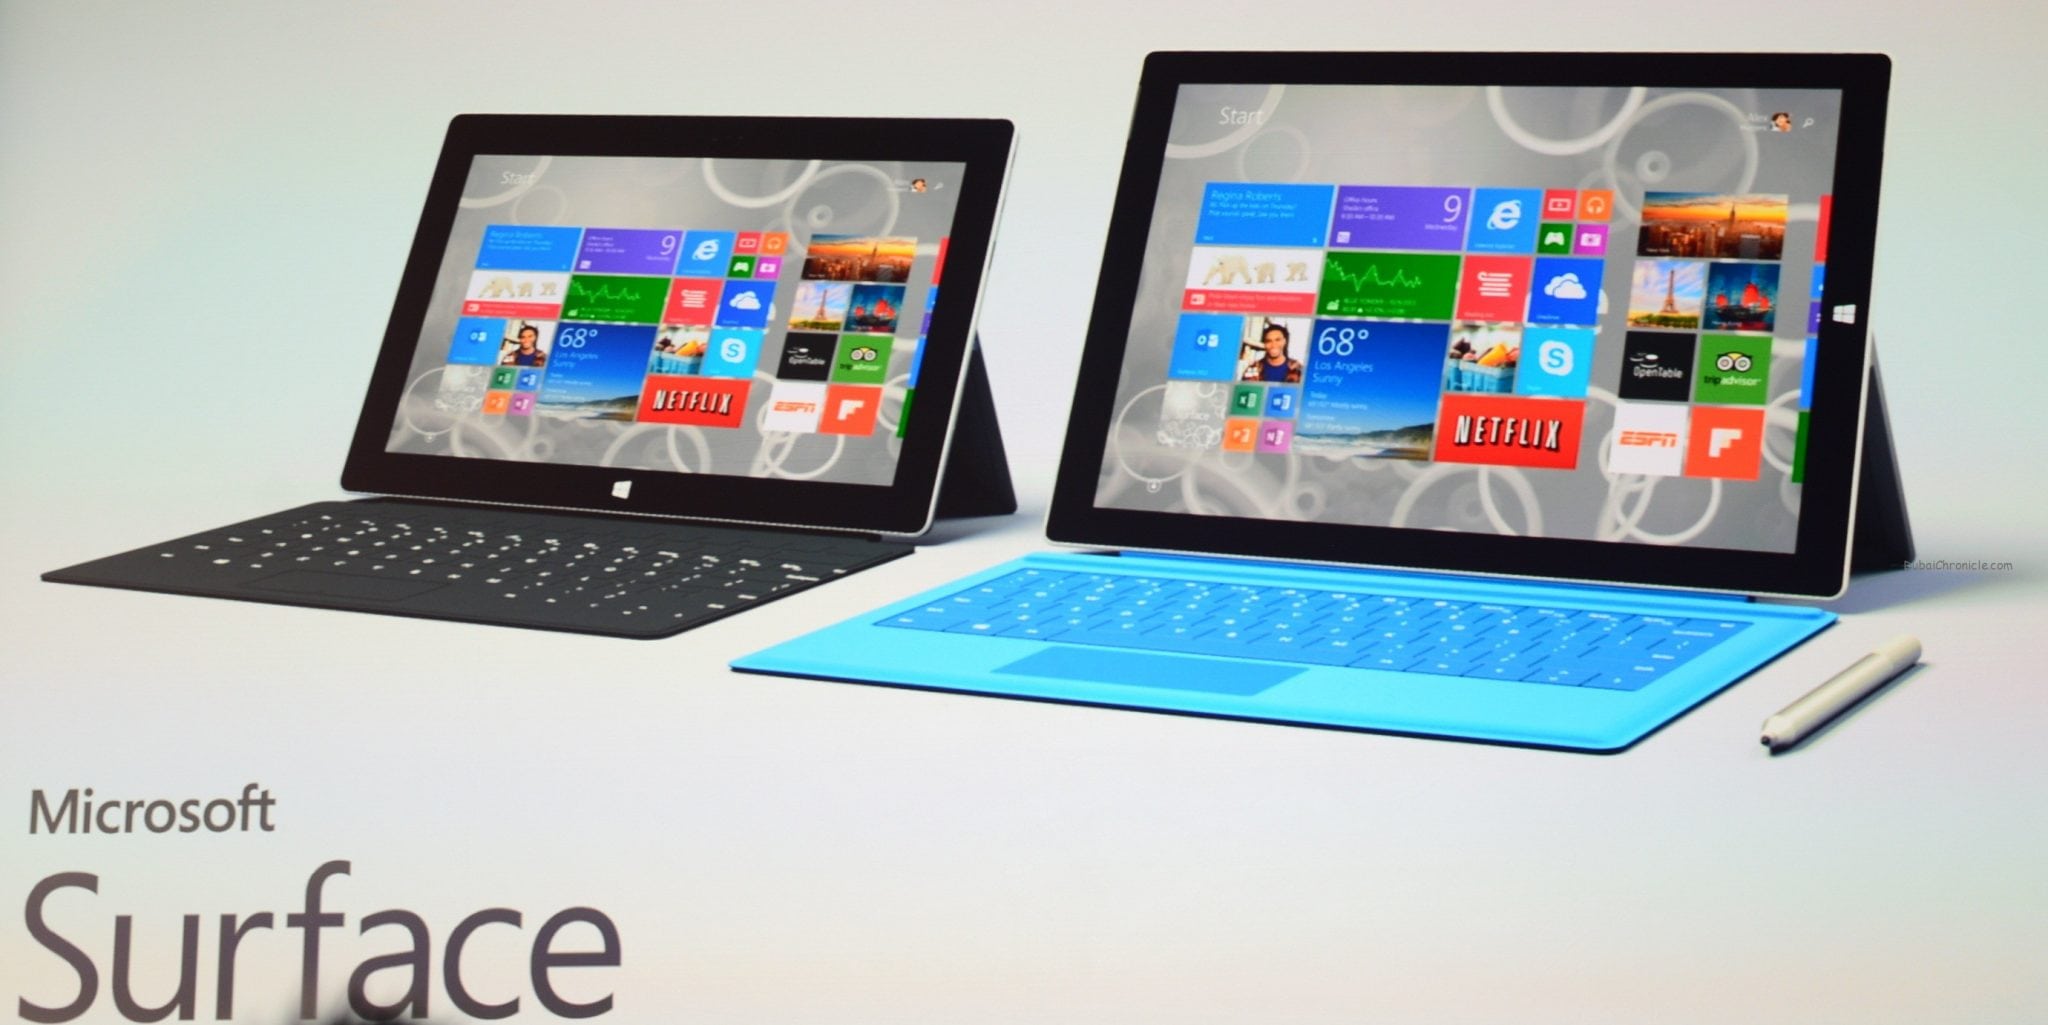 iPad Pro vs. Surface Pro 3